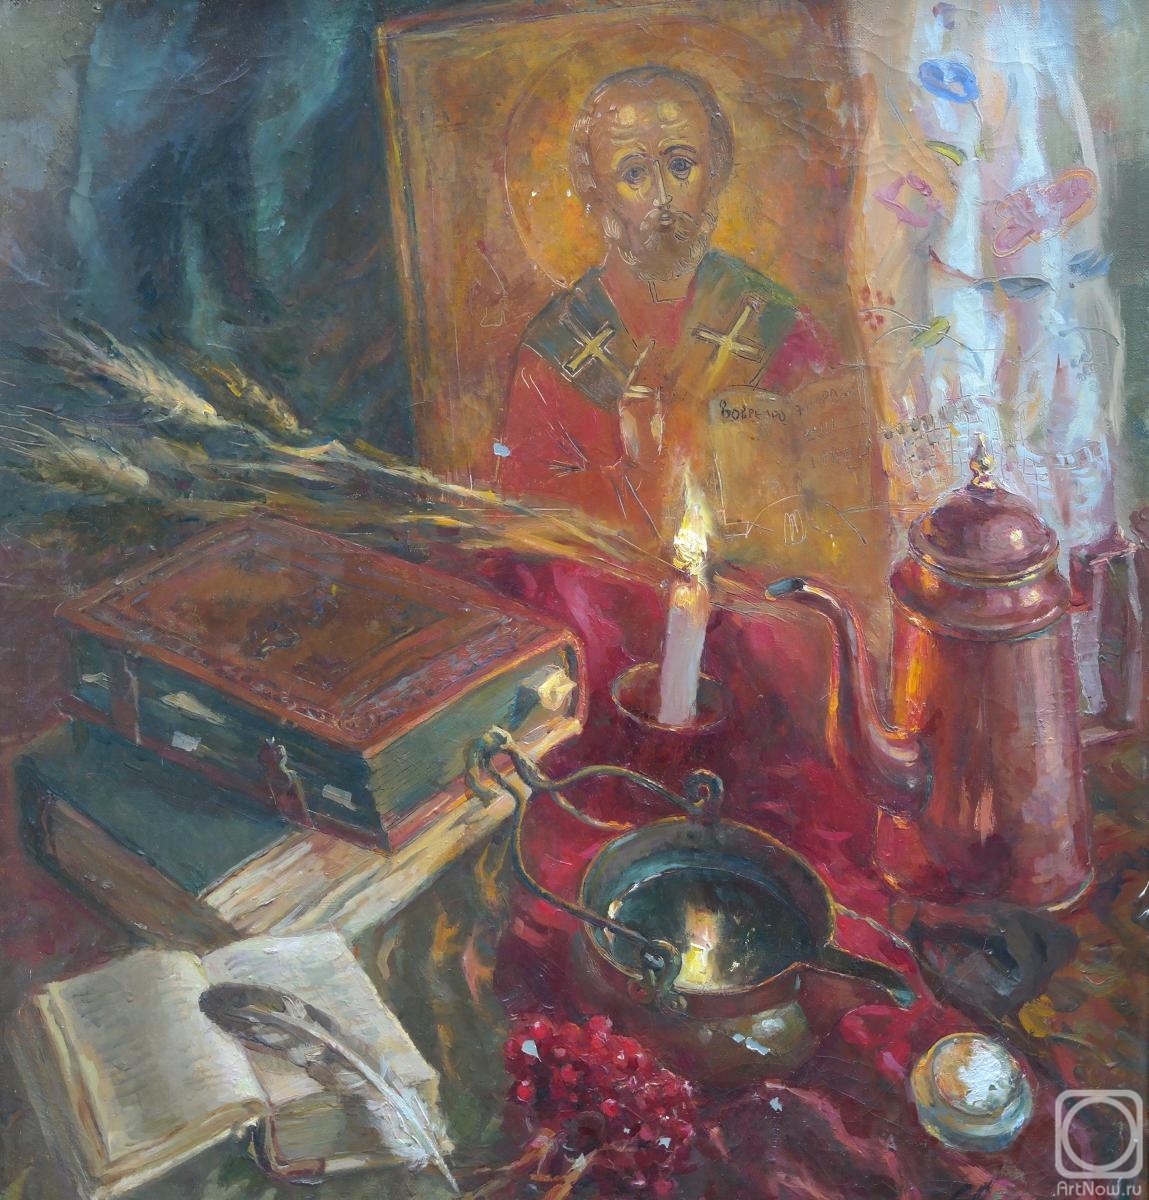 Sorokina Olga. Untitled